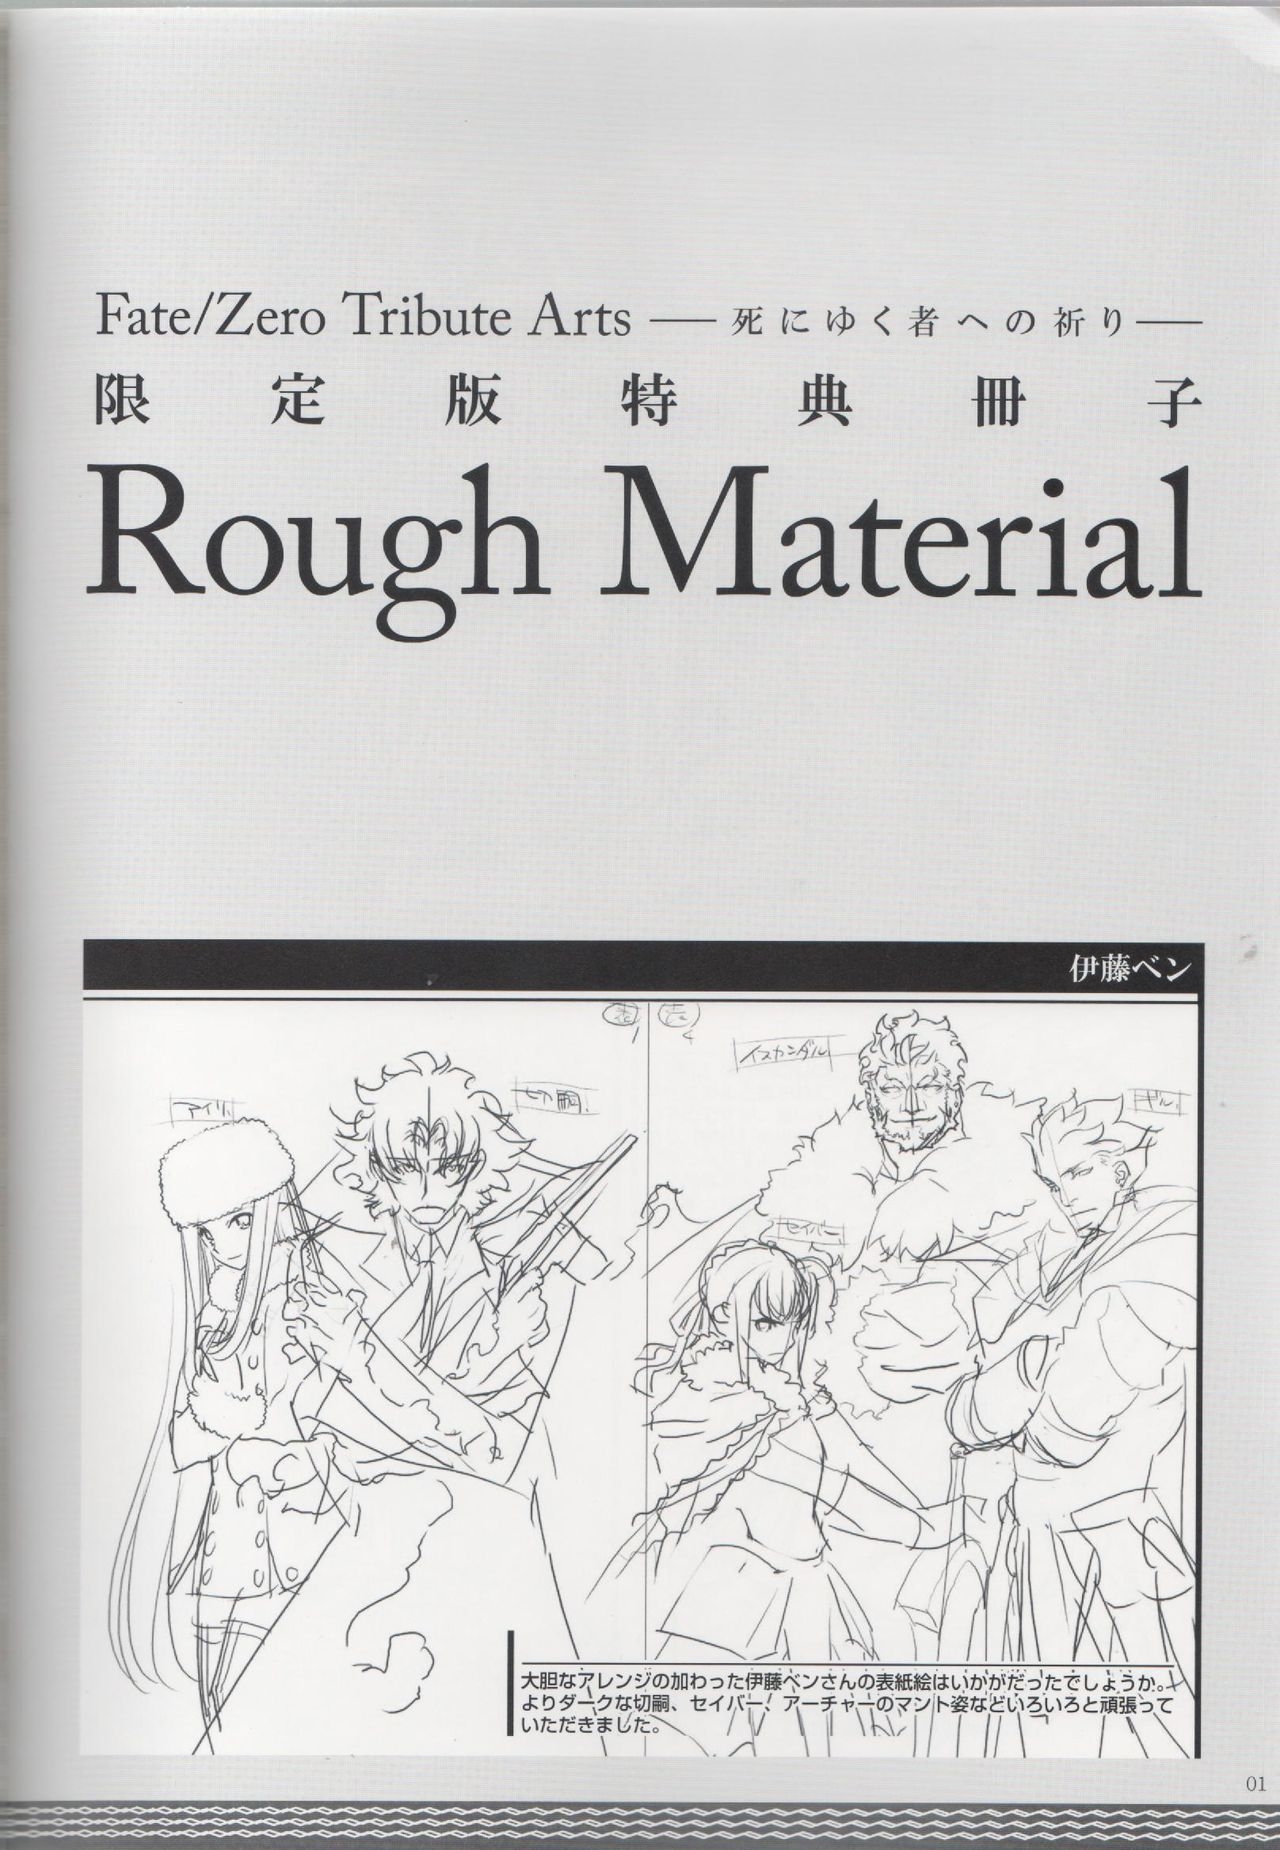 FATE Zero Tribute Arts - Rough Material 3